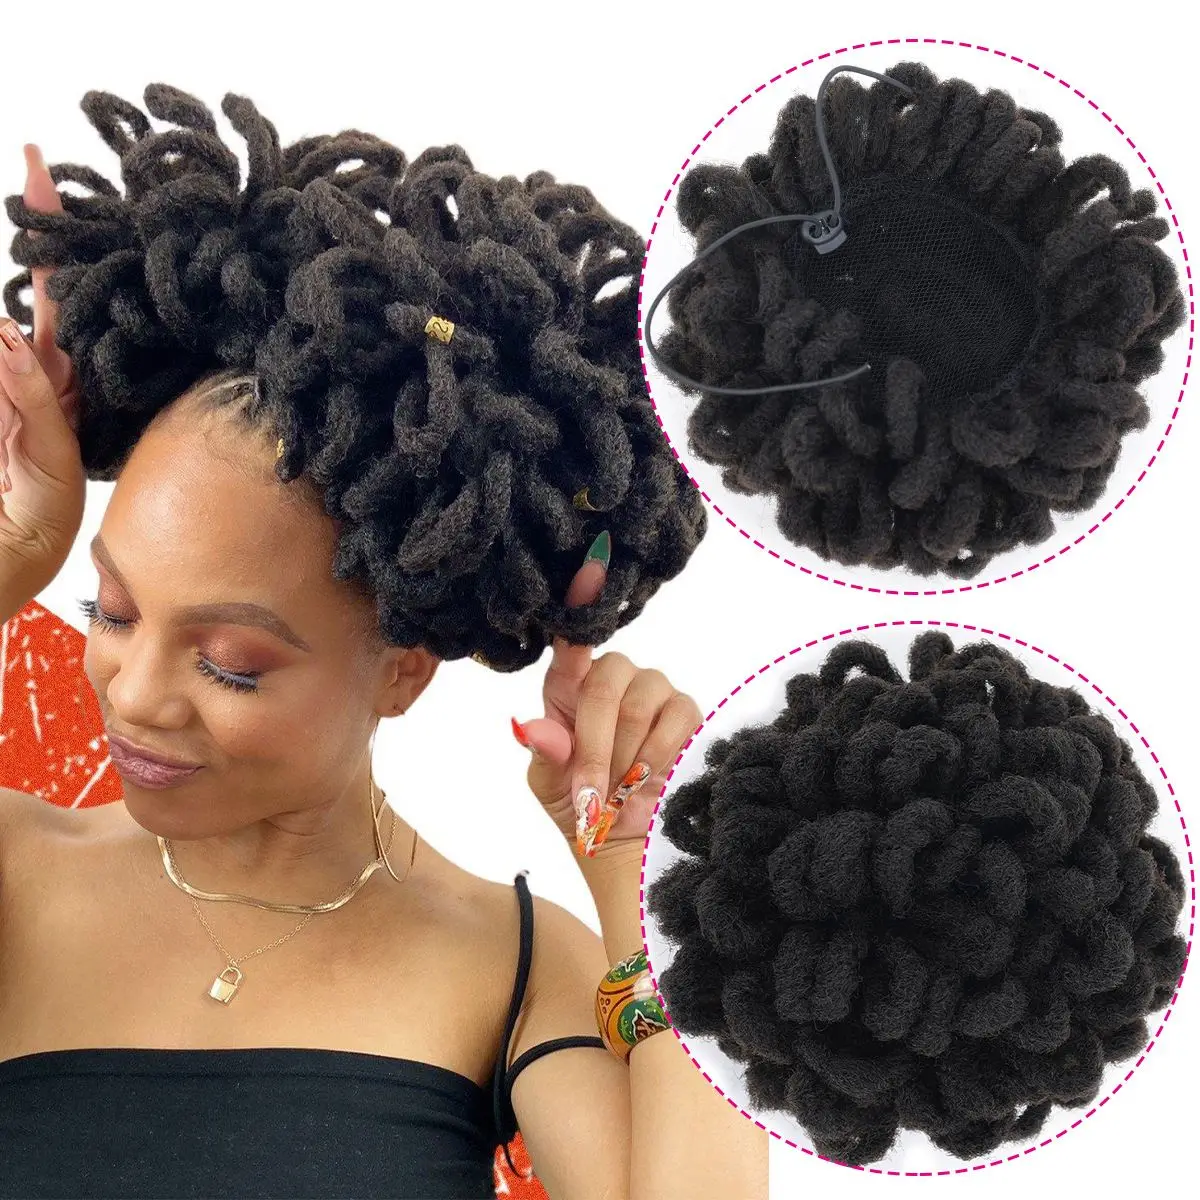 DIFEI Synthetic Drawstring Afro Puff Chignon Natural Hair Bun Woman's Hair Extensions Ponytail Bun Clip Hairpiece